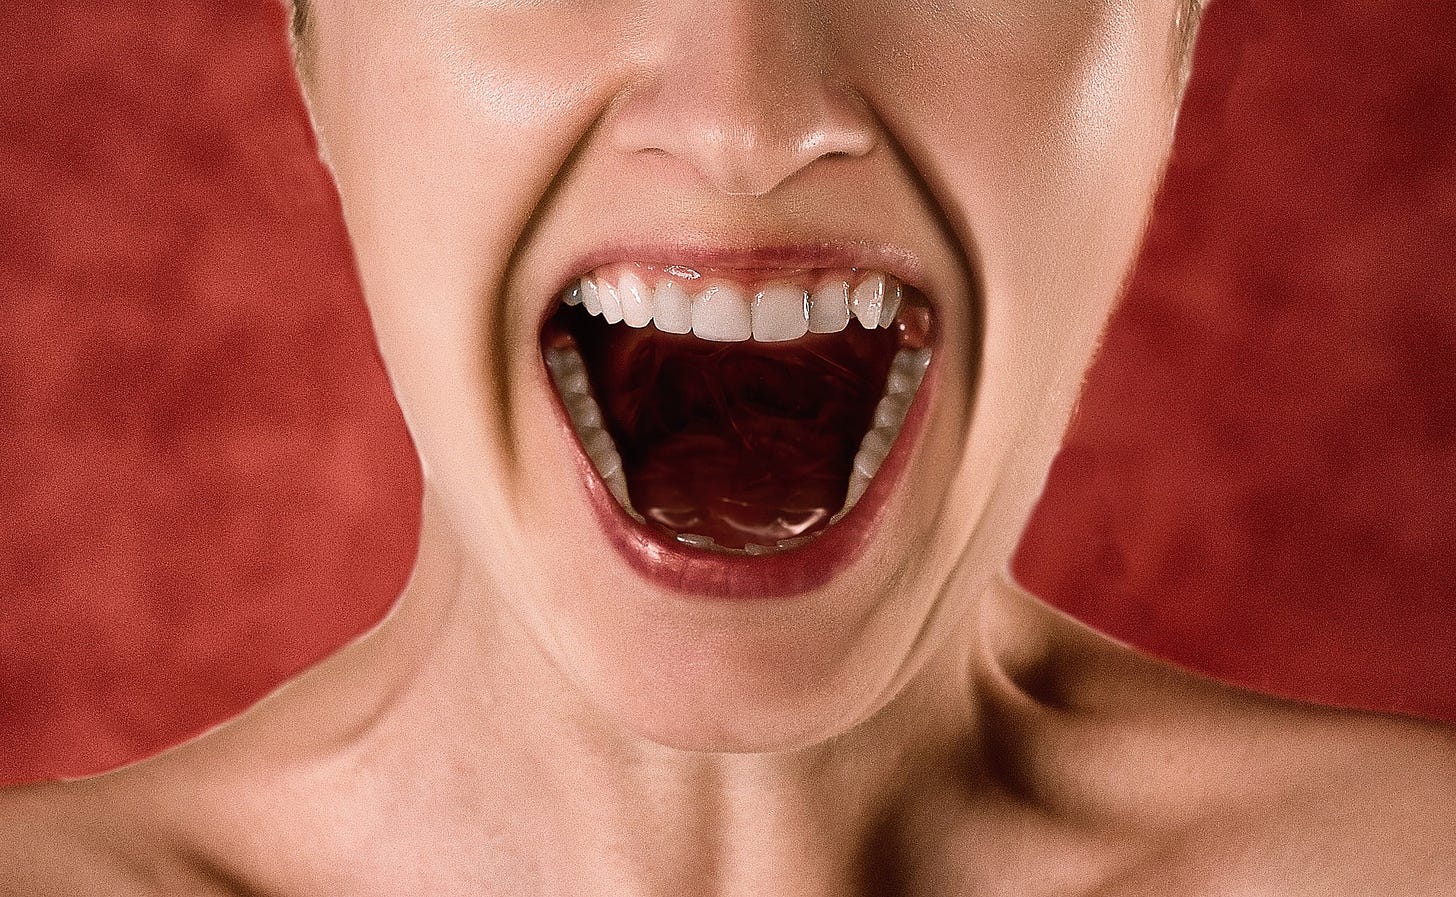 Woman's mouth